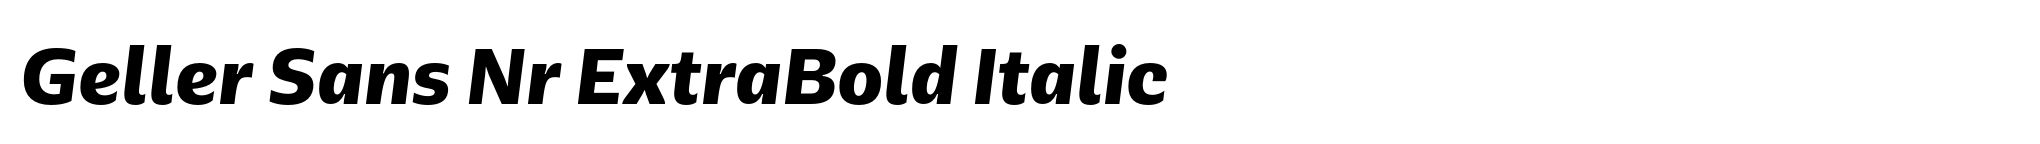 Geller Sans Nr ExtraBold Italic image